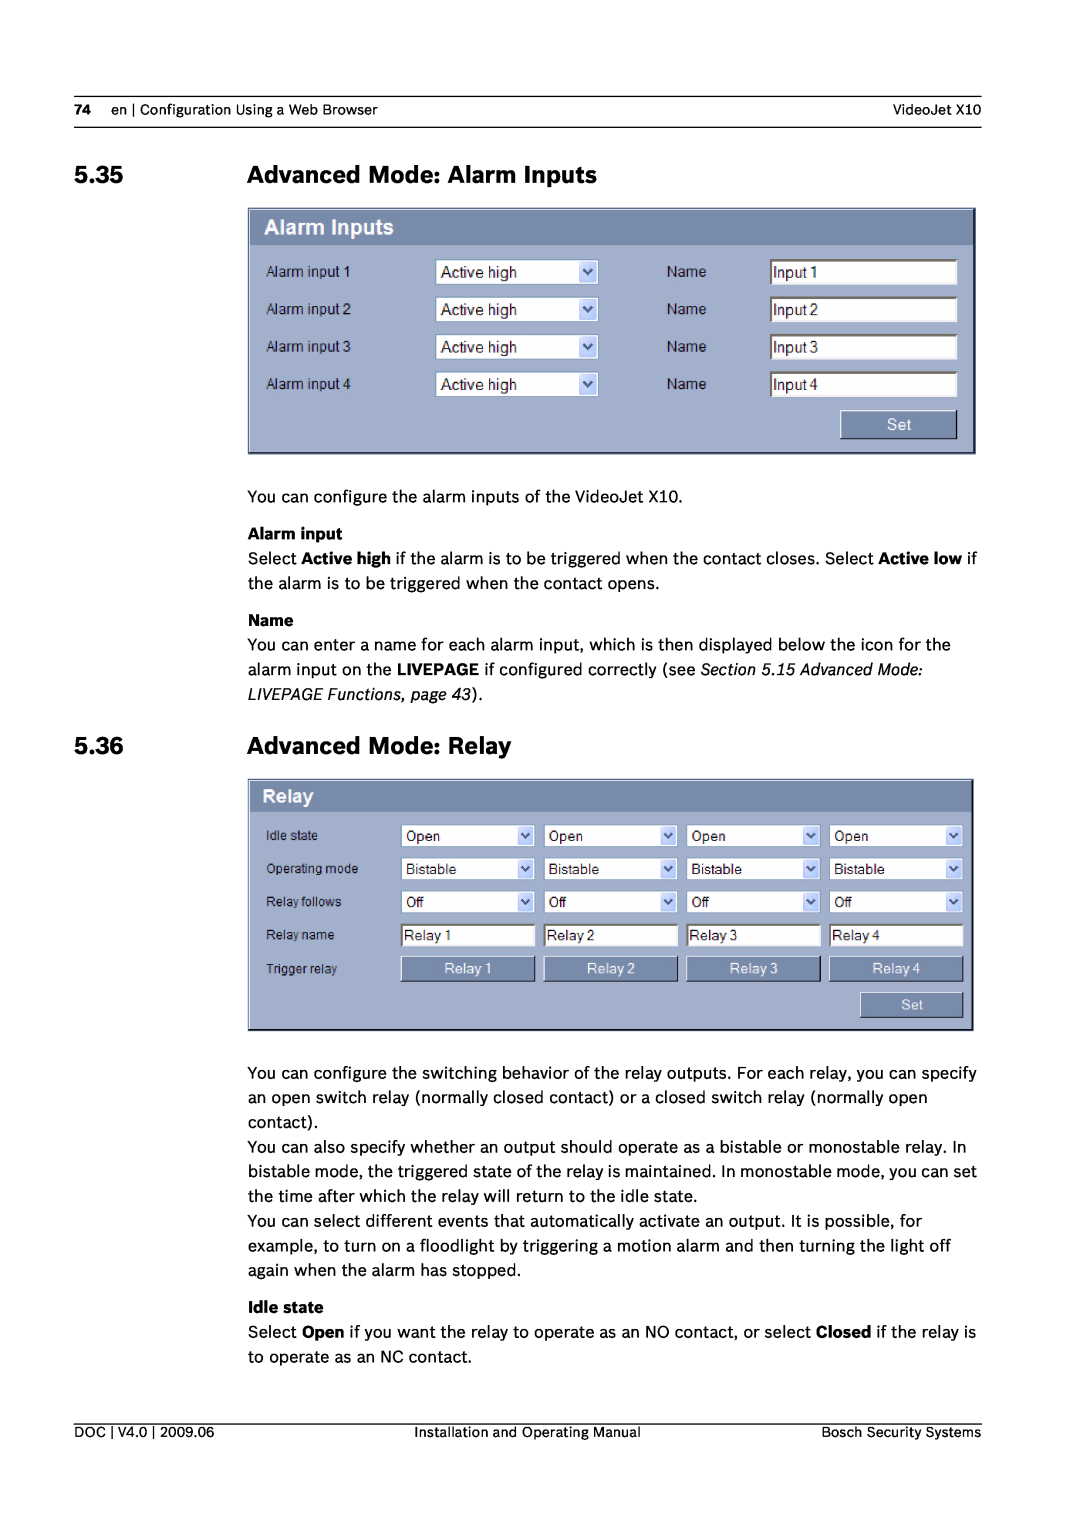 Bosch Appliances X10 manual 5.35, Advanced Mode Alarm Inputs, 5.36, Advanced Mode Relay, Alarm input, Idle state, Name 